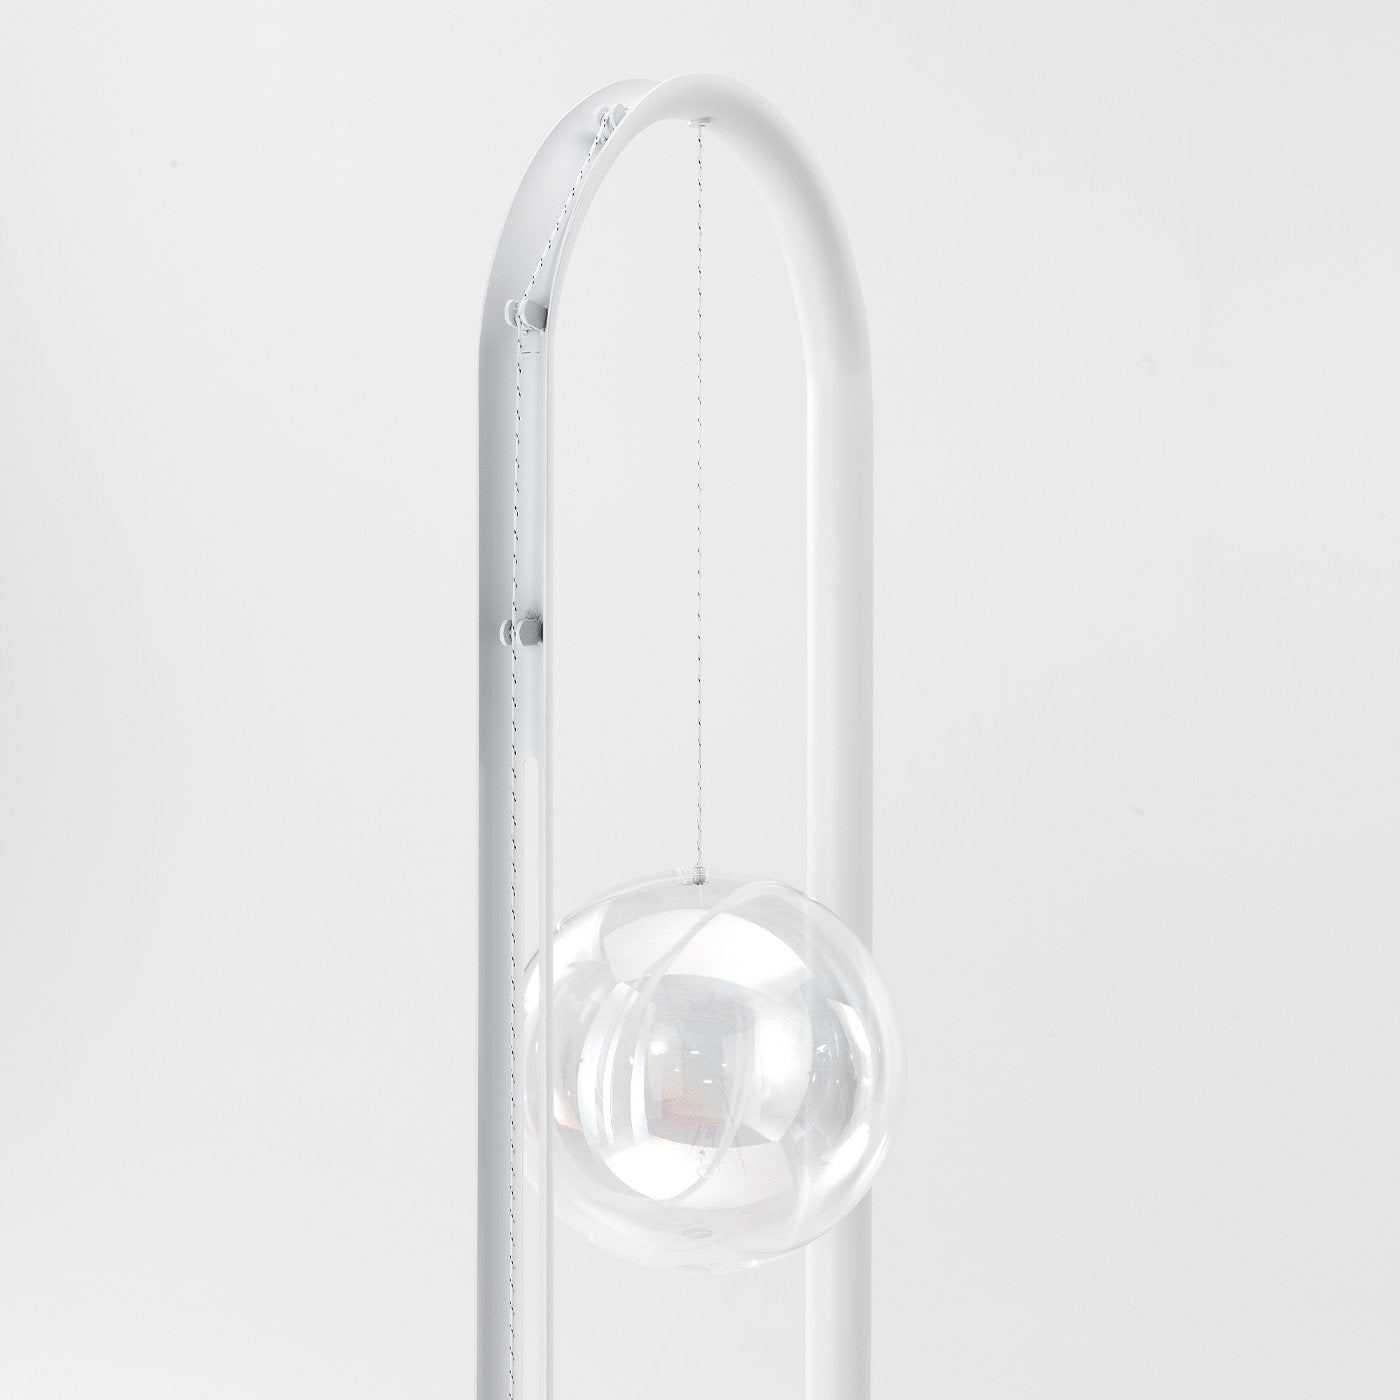 SURANDE FLOOR LAMP - Design by Alessandro Zambelli - Alternative view 2